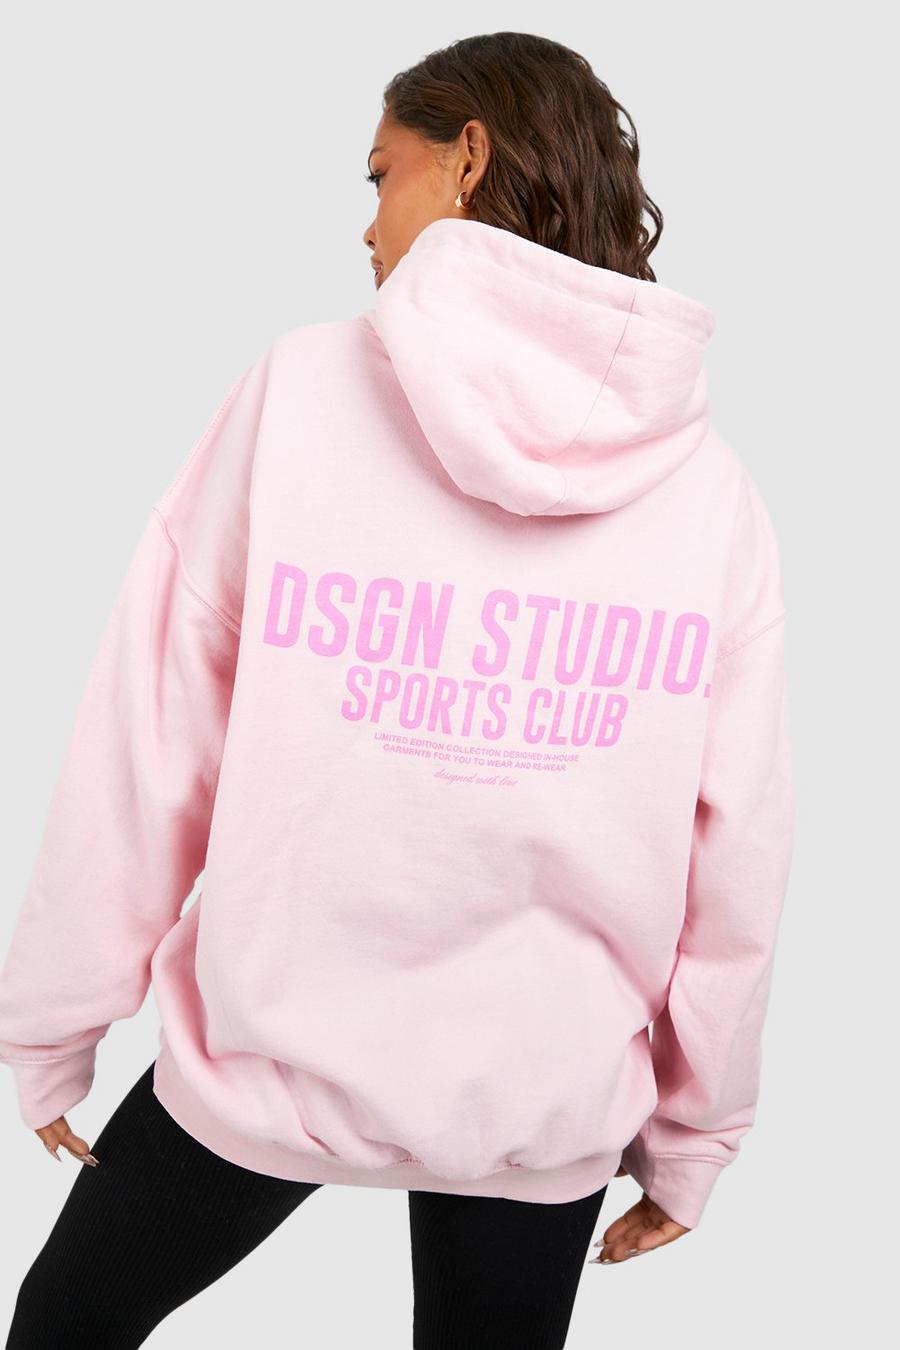 Light pink Dsgn Studio Sports Club Slogan Printed Oversized Hoodie